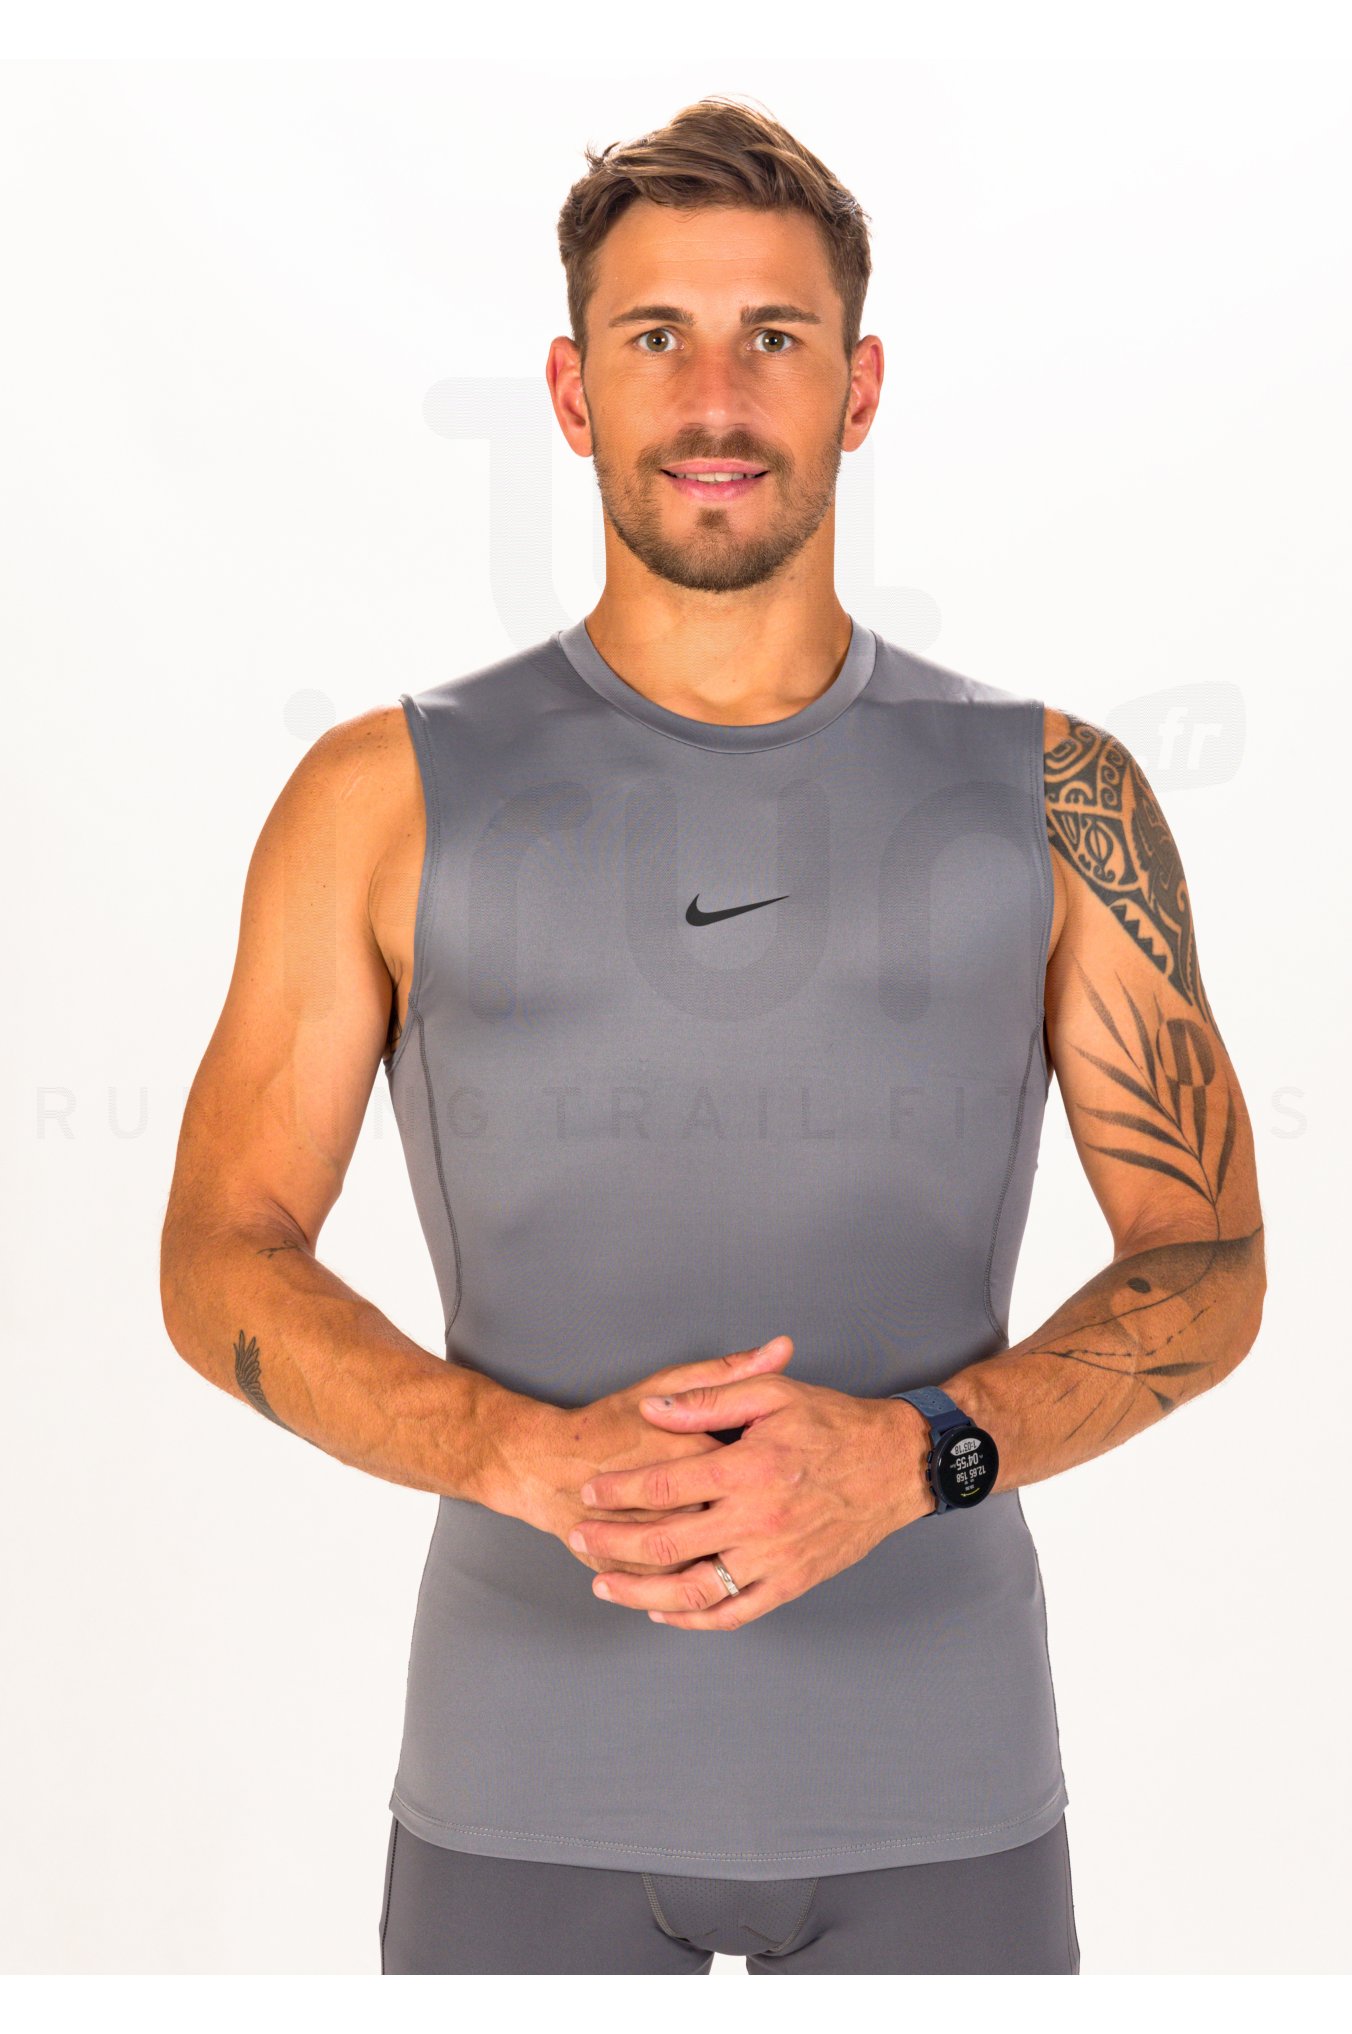 Nike Pro Cool Compression M vêtement running homme : infos, avis